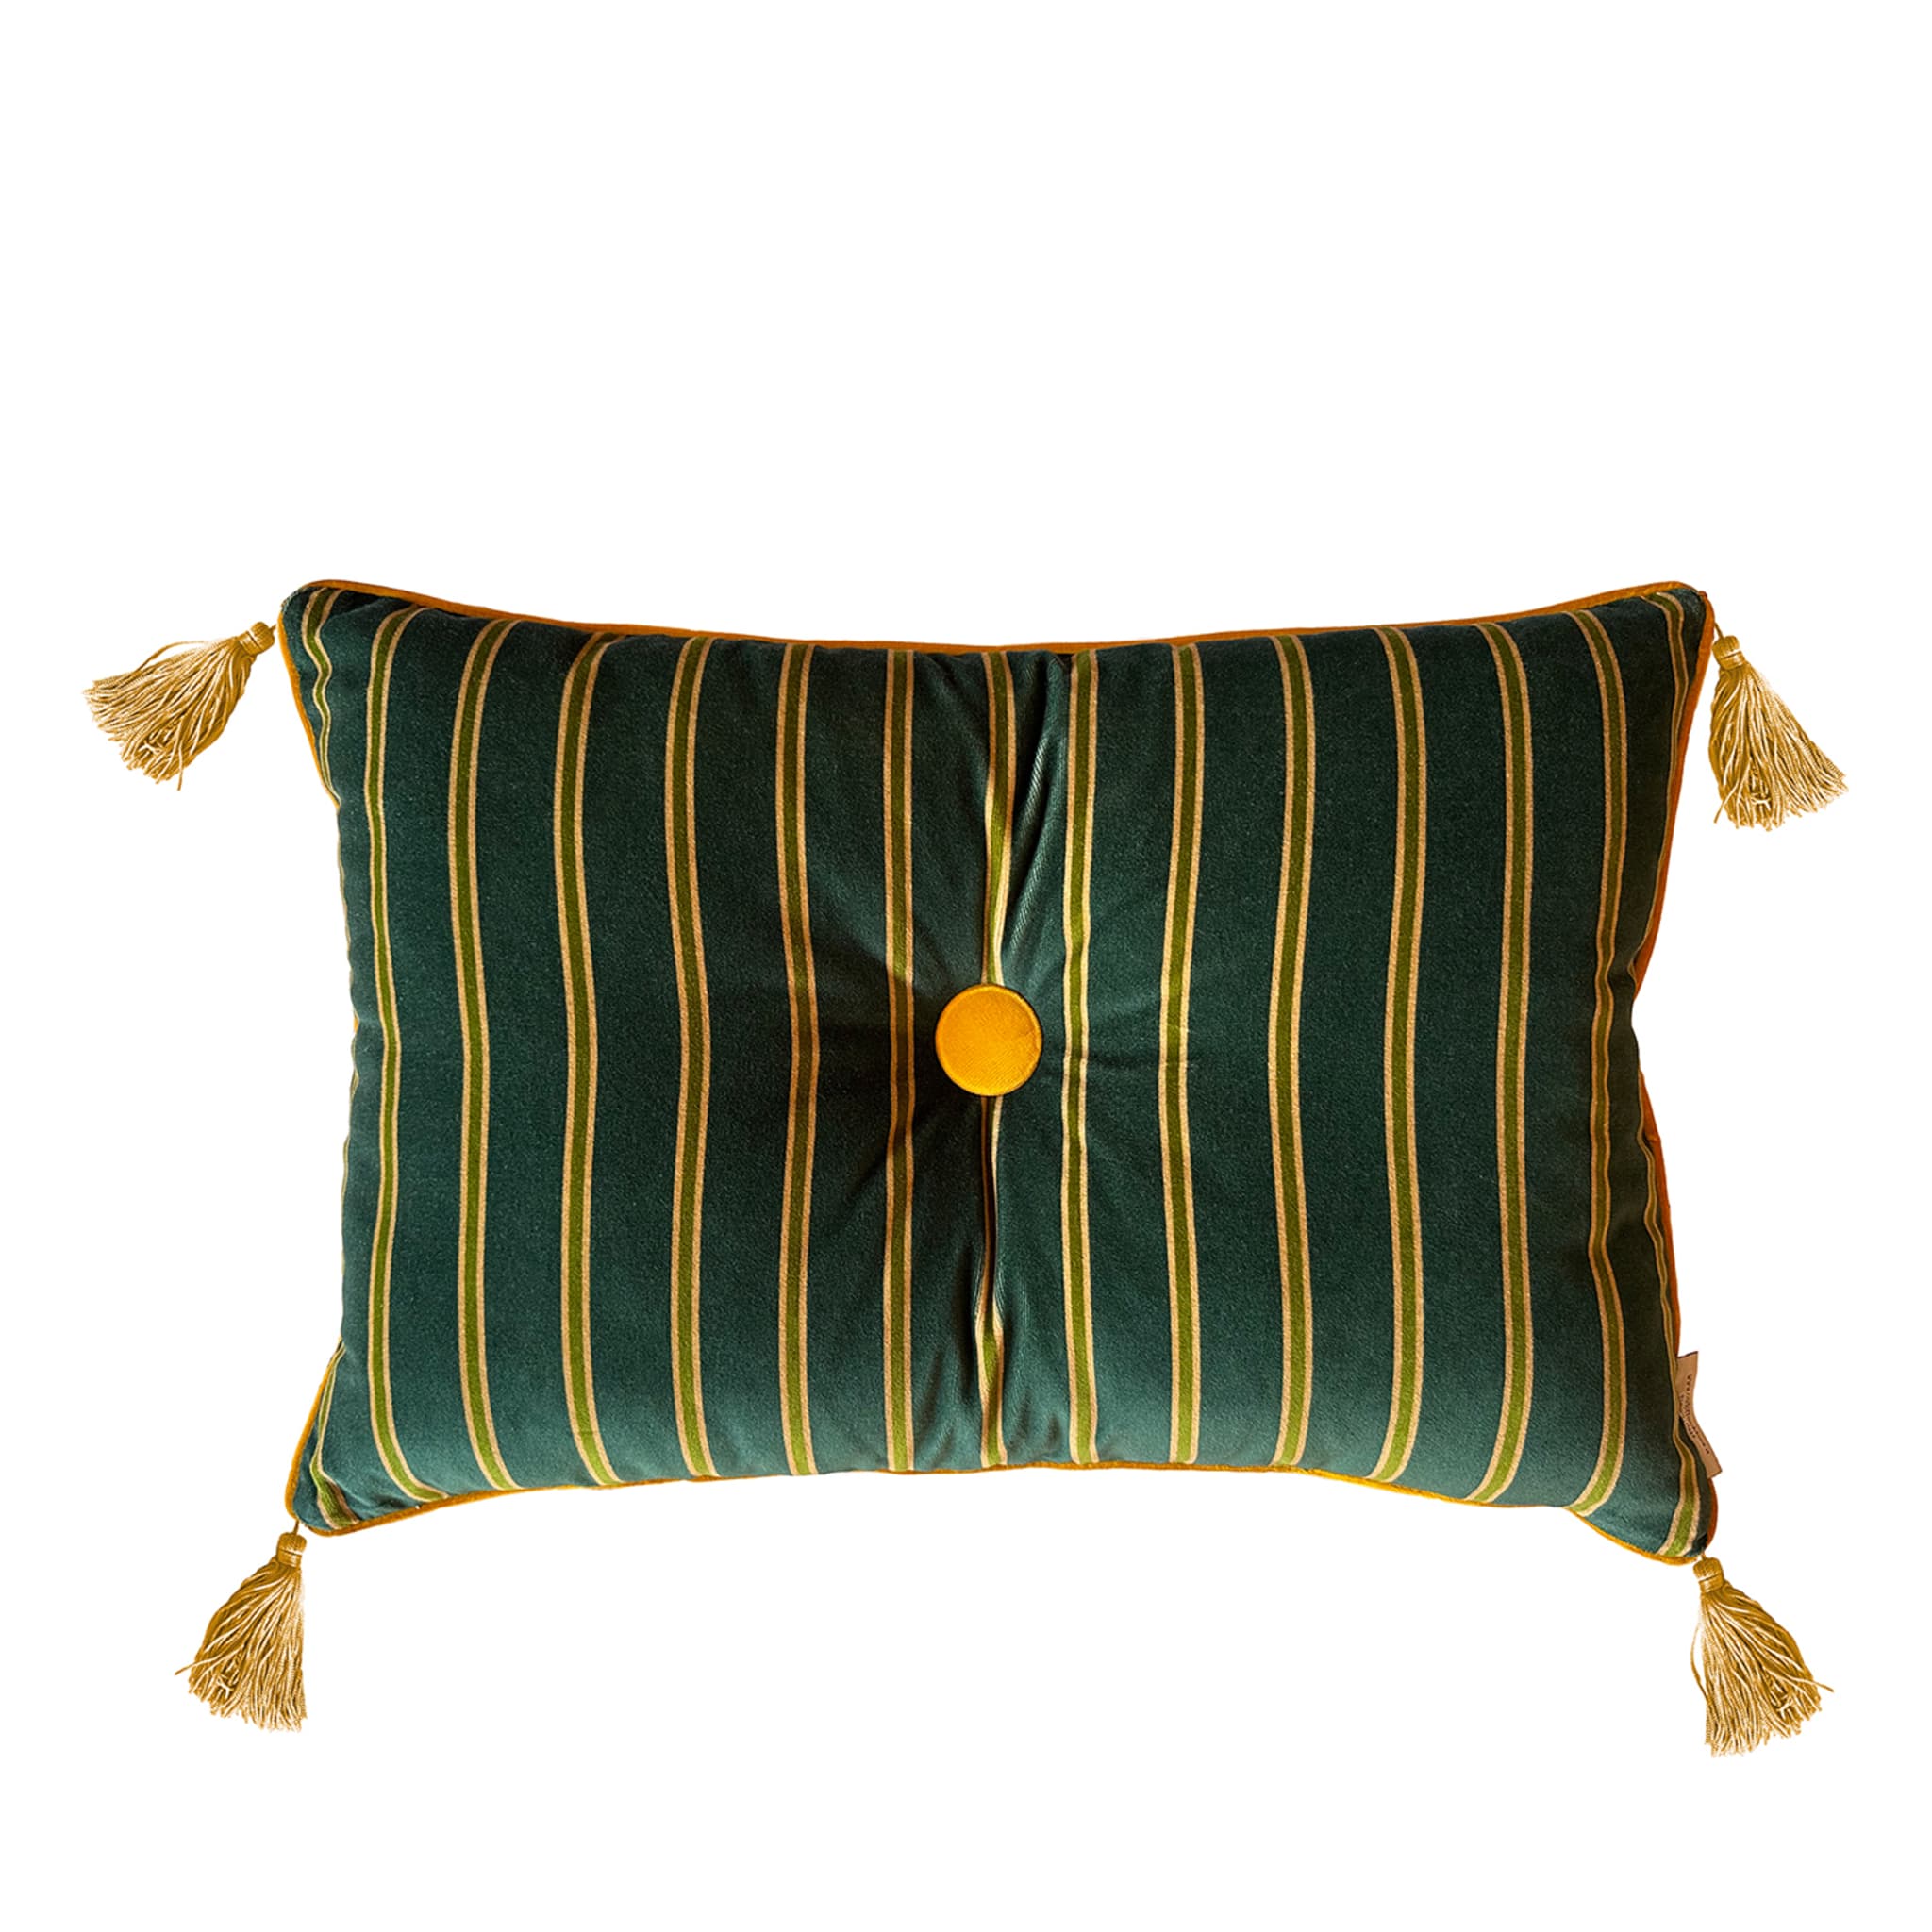 Sweet Pillow Rectangular Striped Forest-Green Cushion - Main view